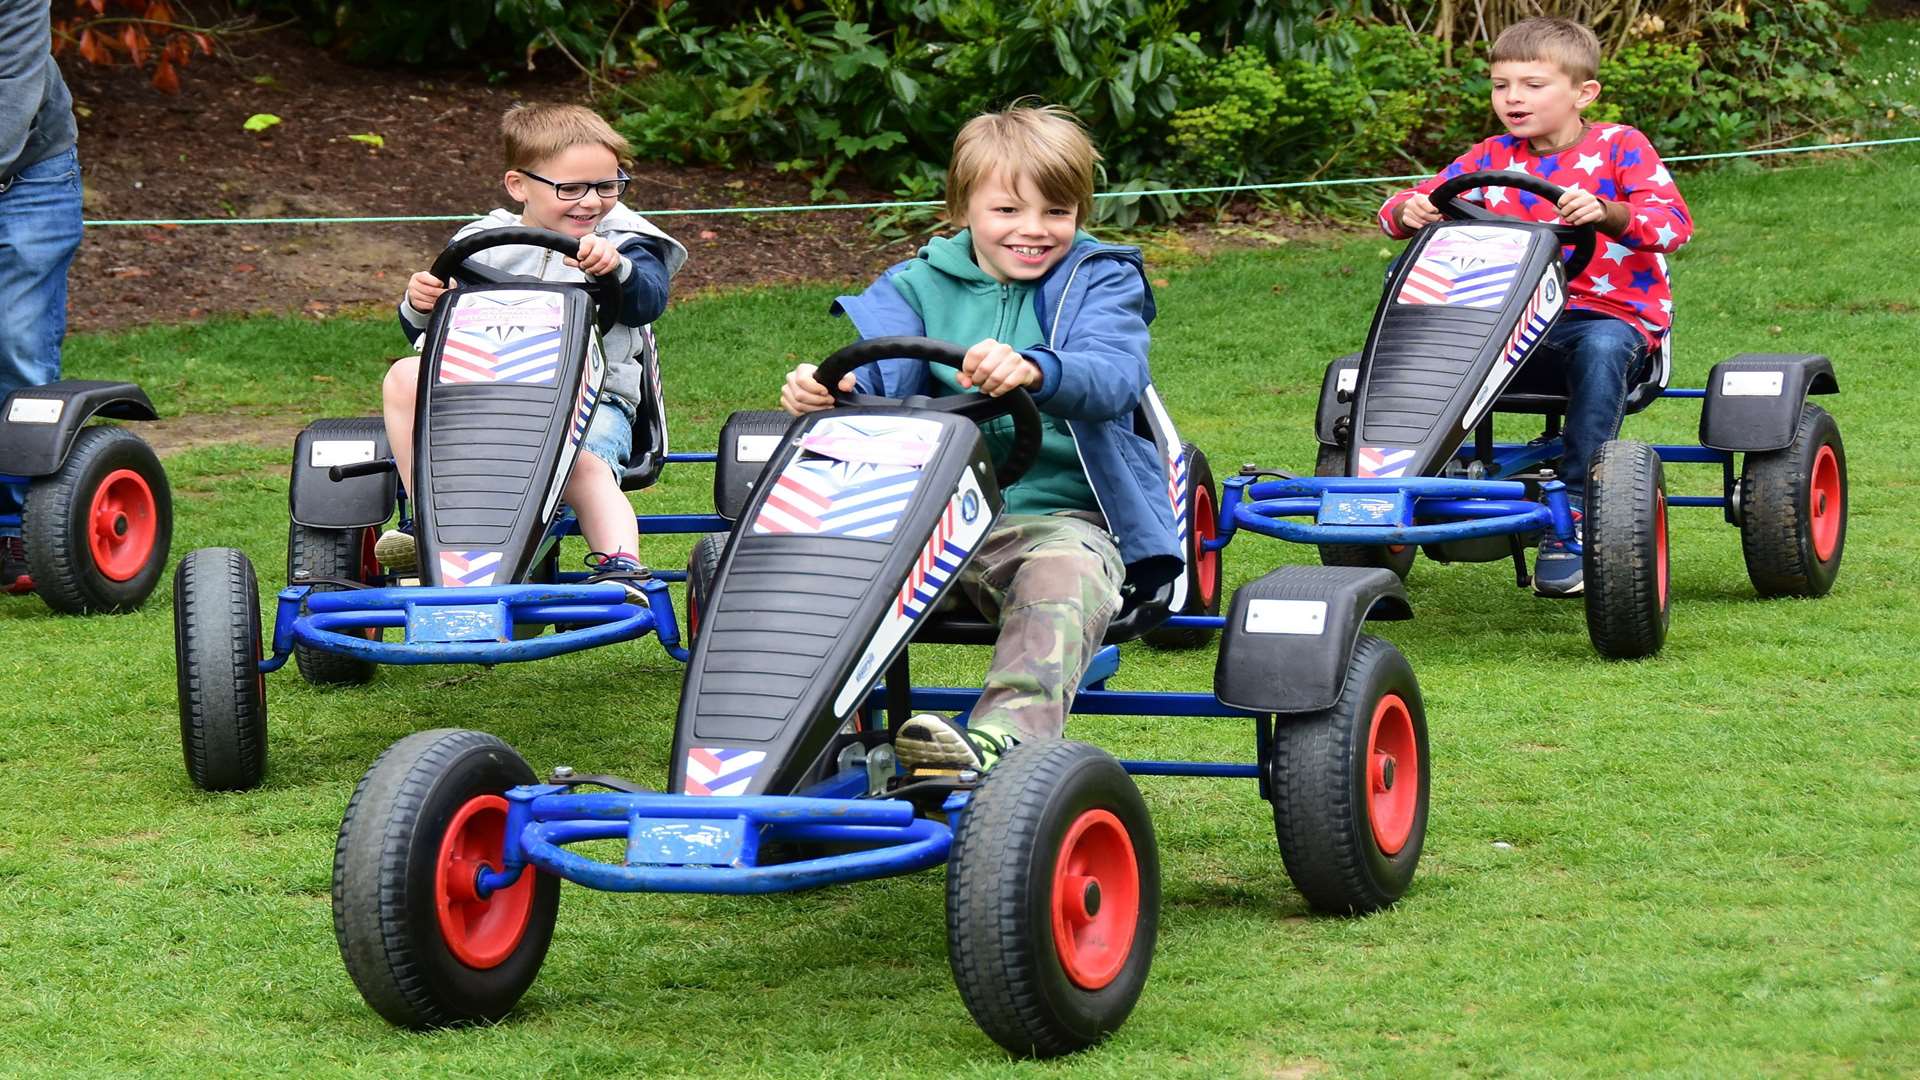 Children enjoying the pedal go-karts at Buster's Big Bash 2016.